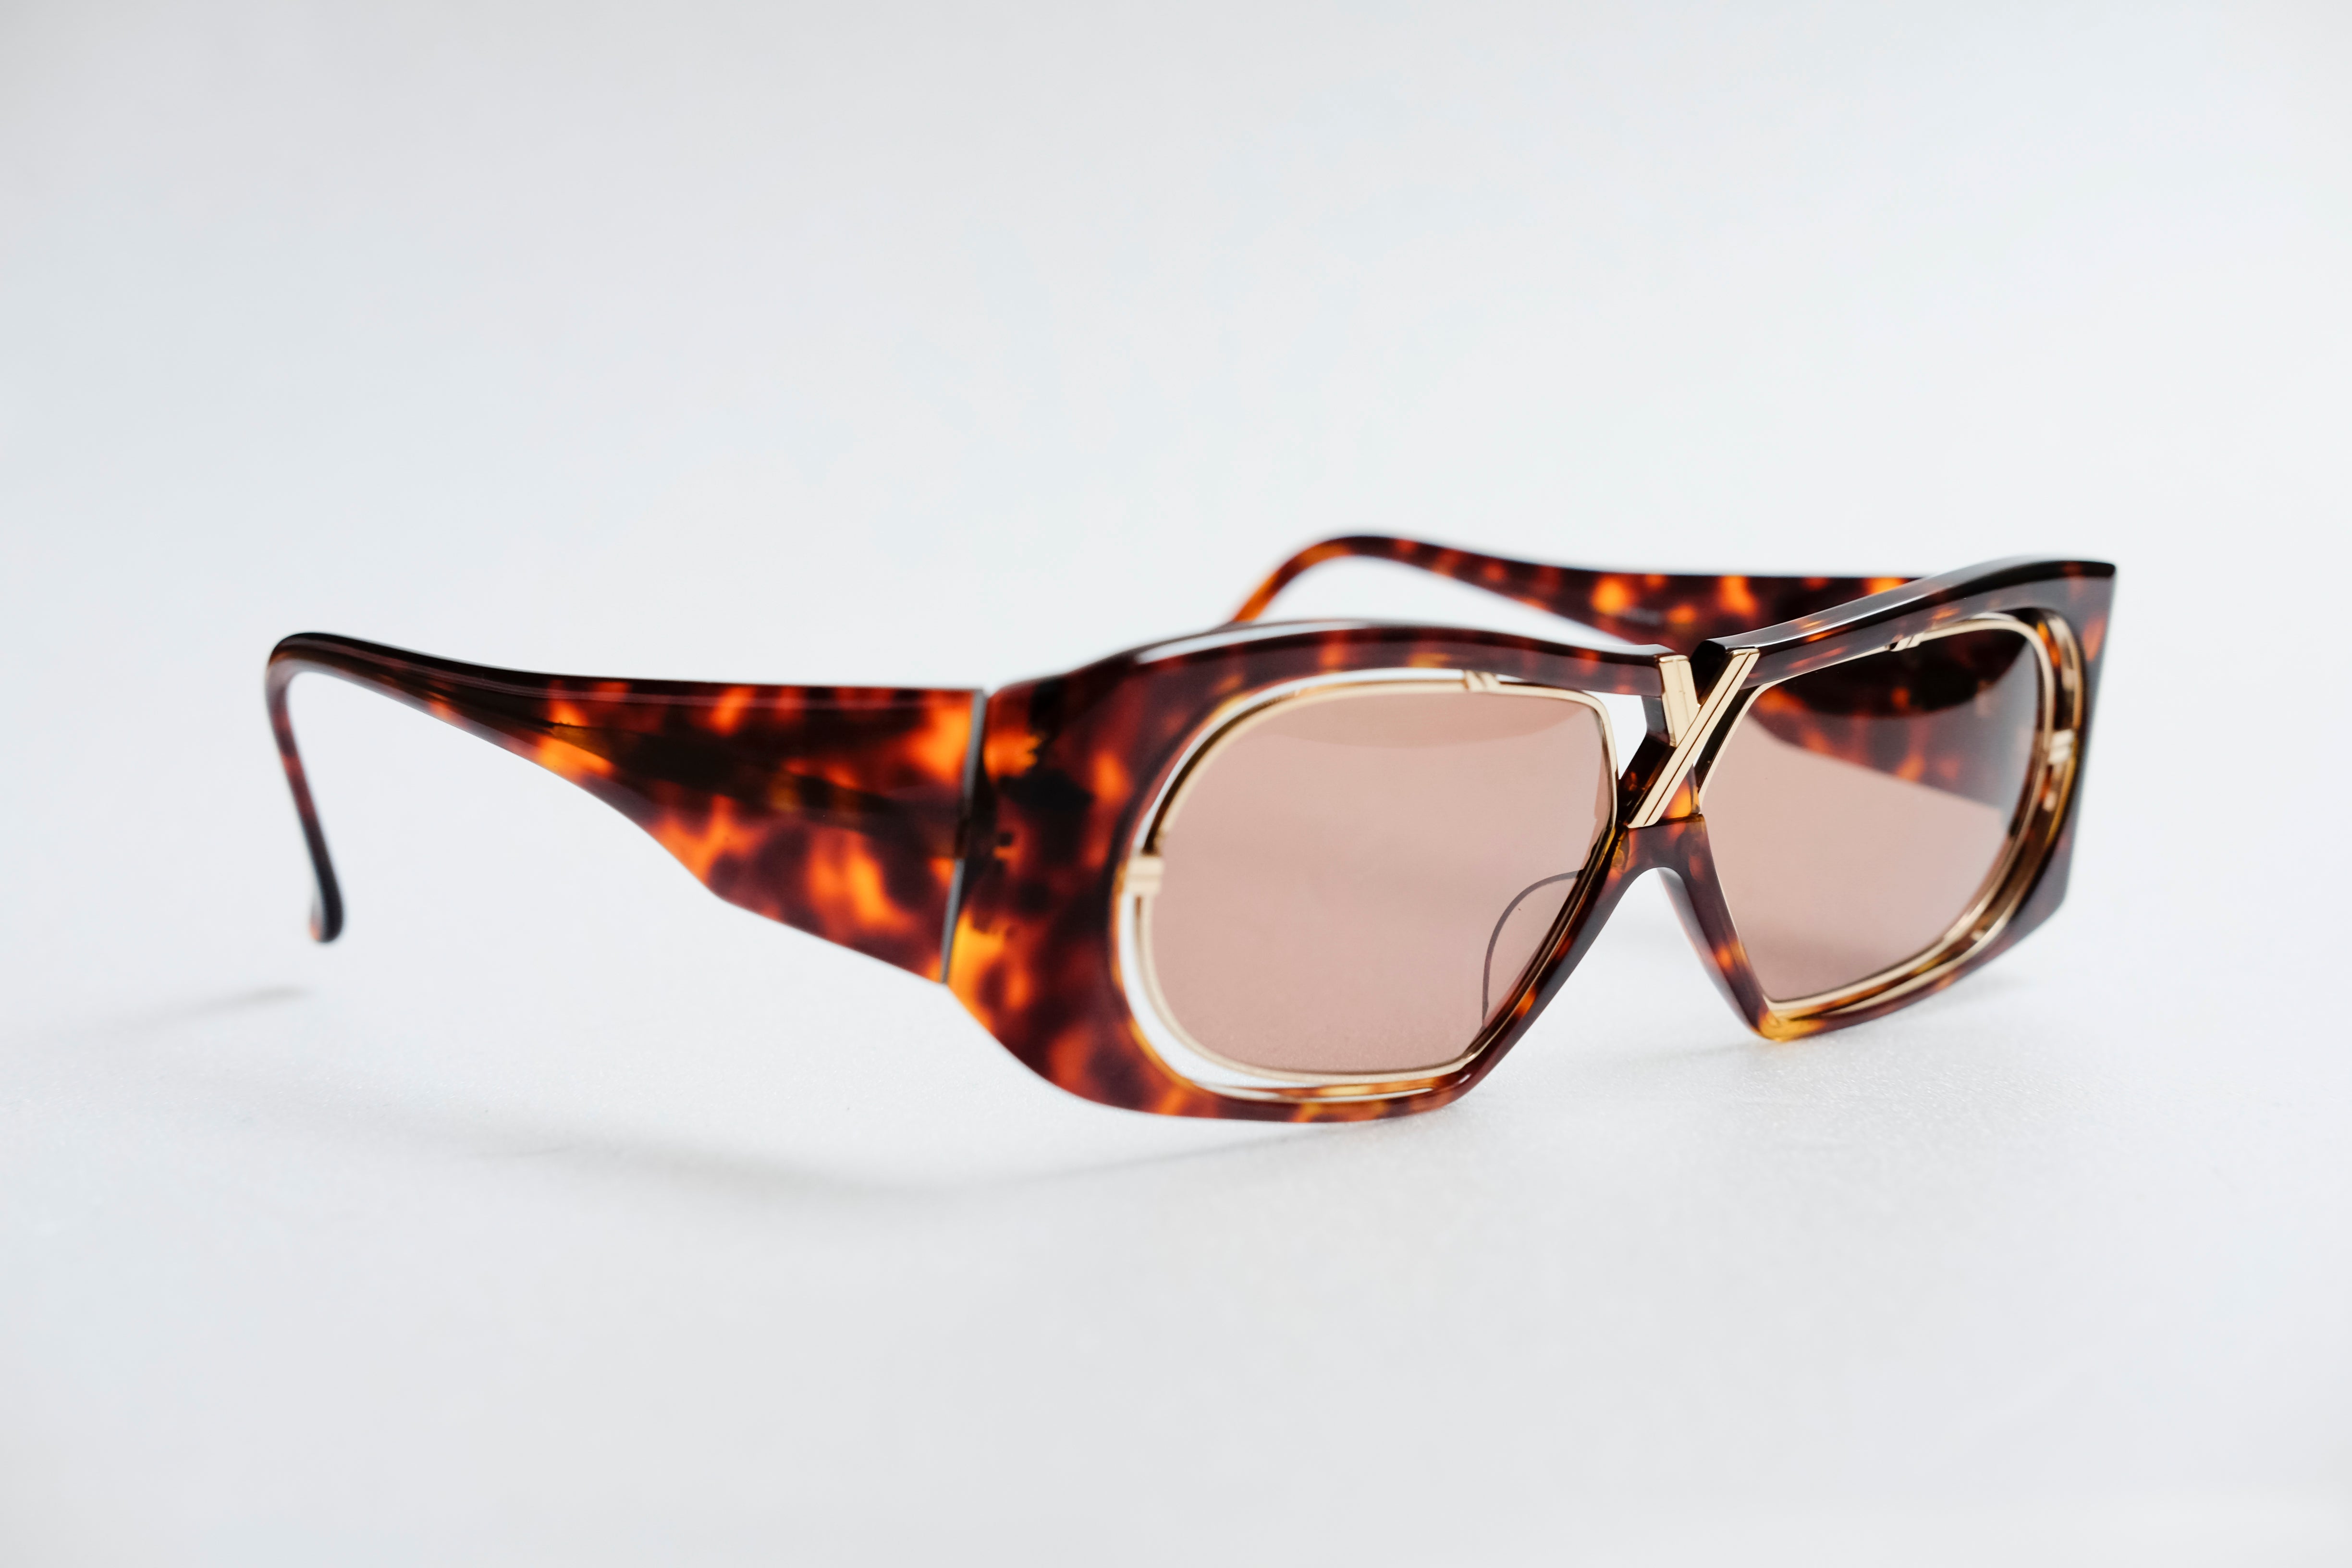 Vintage Yves Saint Laurent Sunglasses